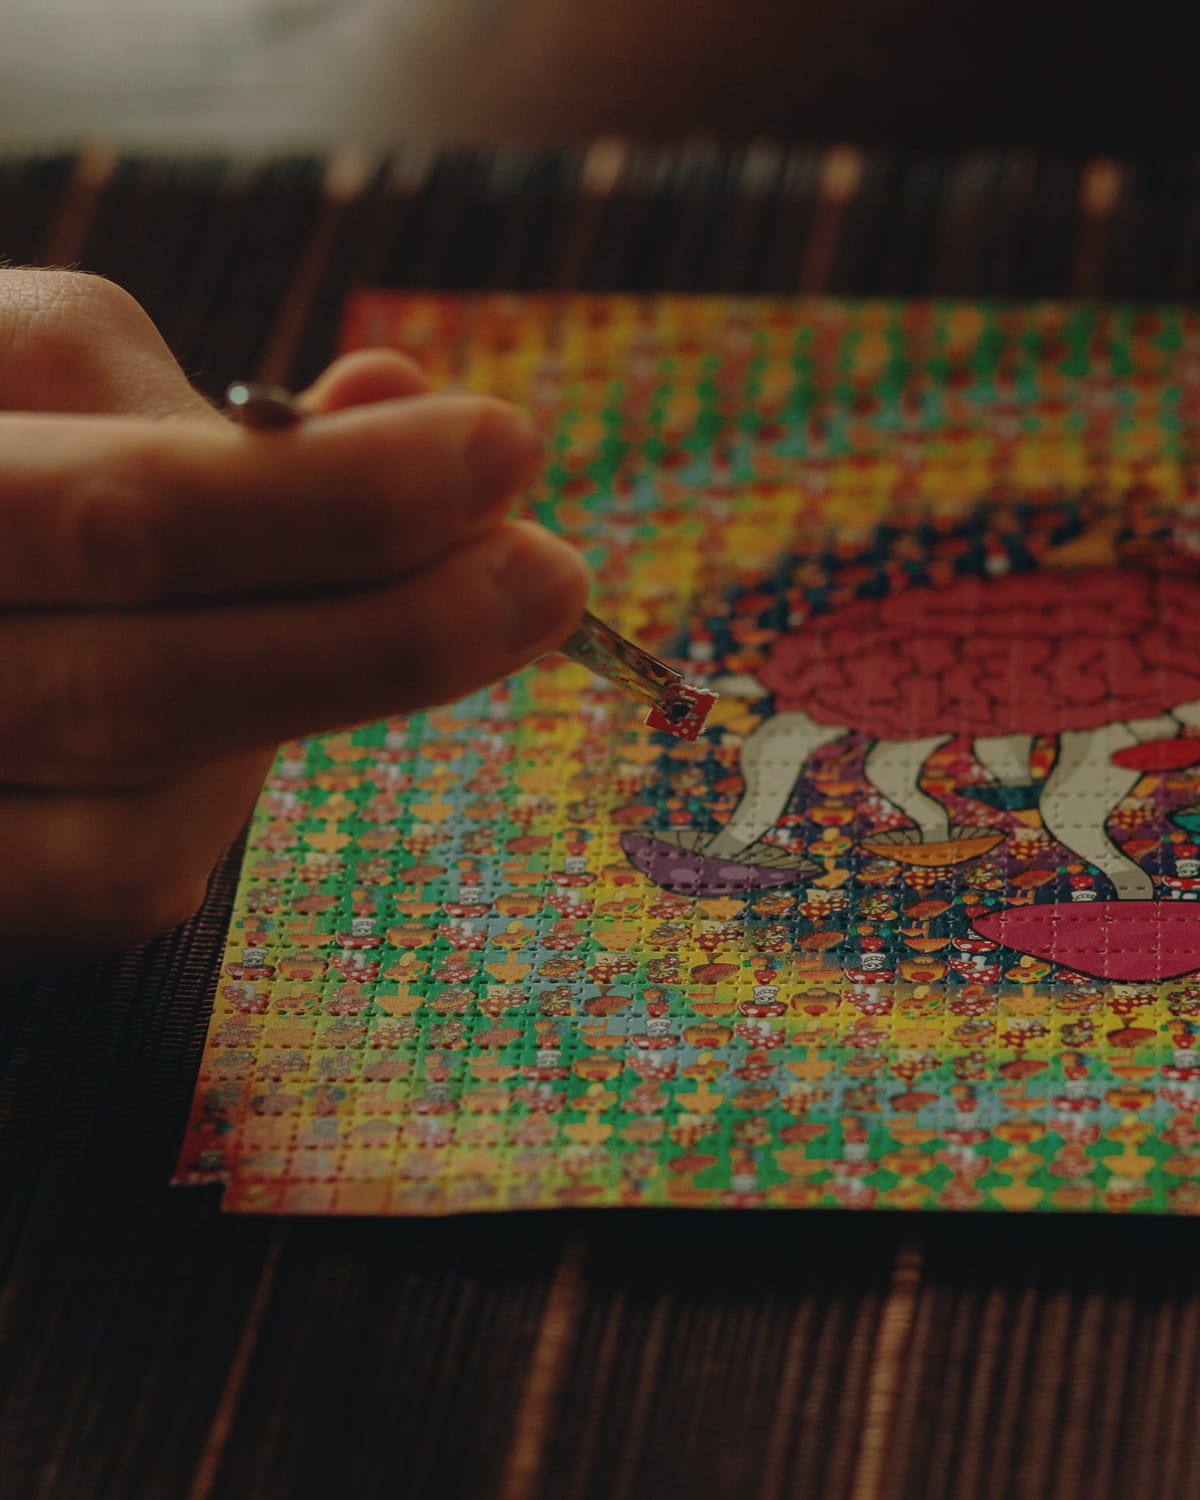 tweezers holding LSD tab